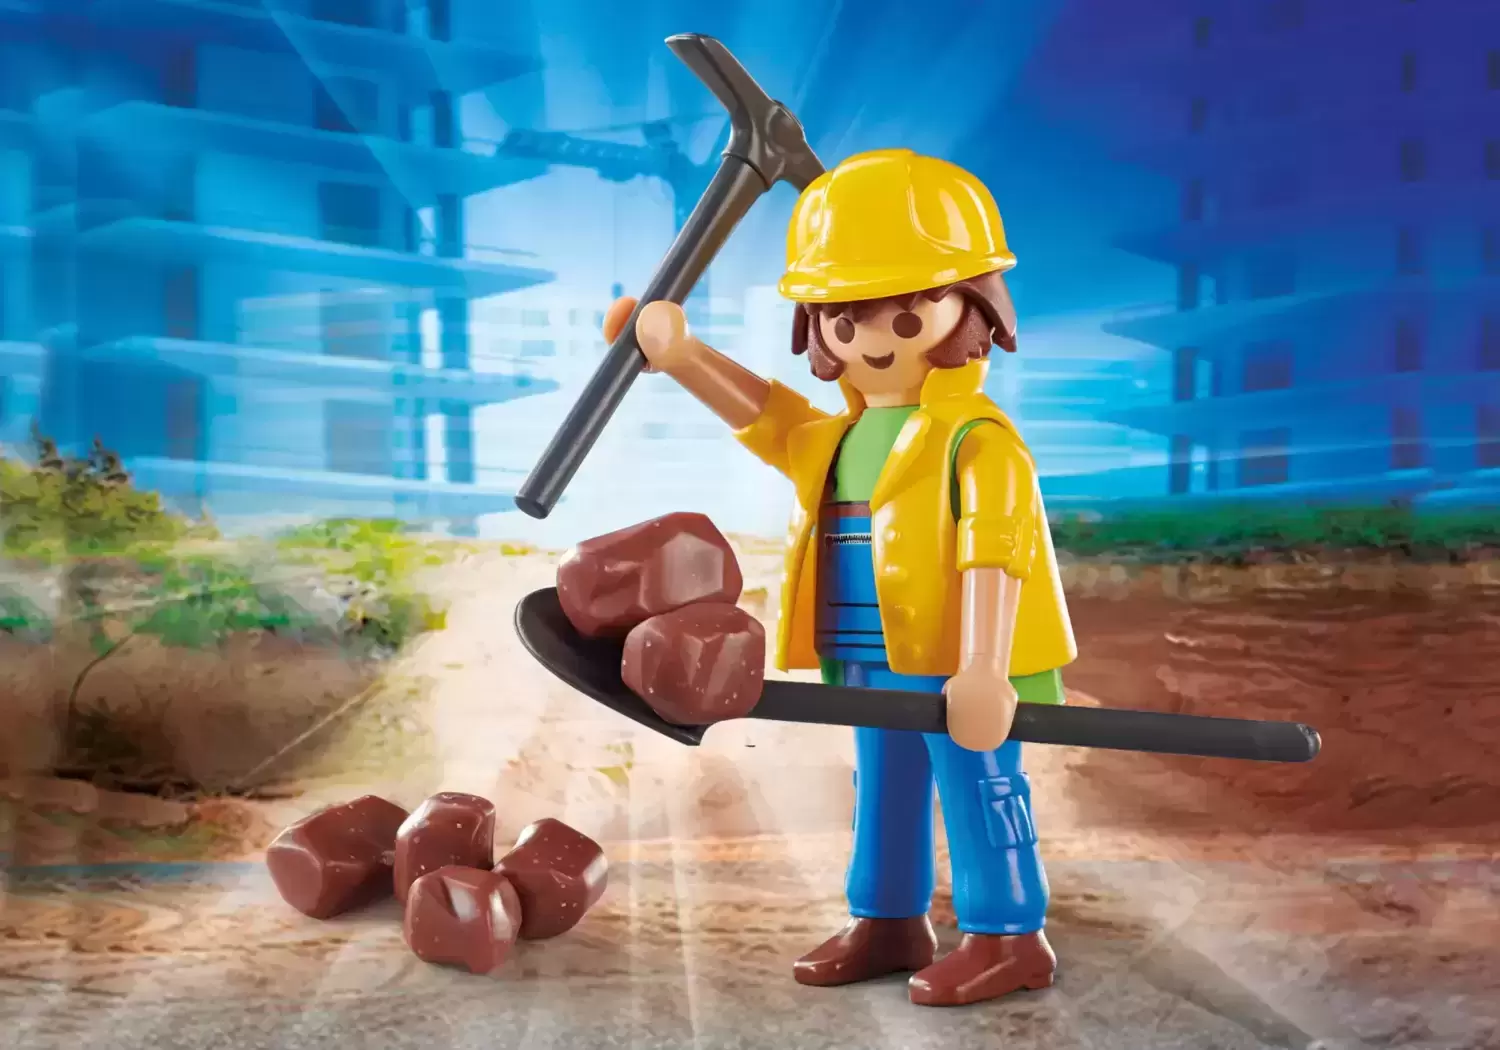 Playmo-Friends - Construction Worker